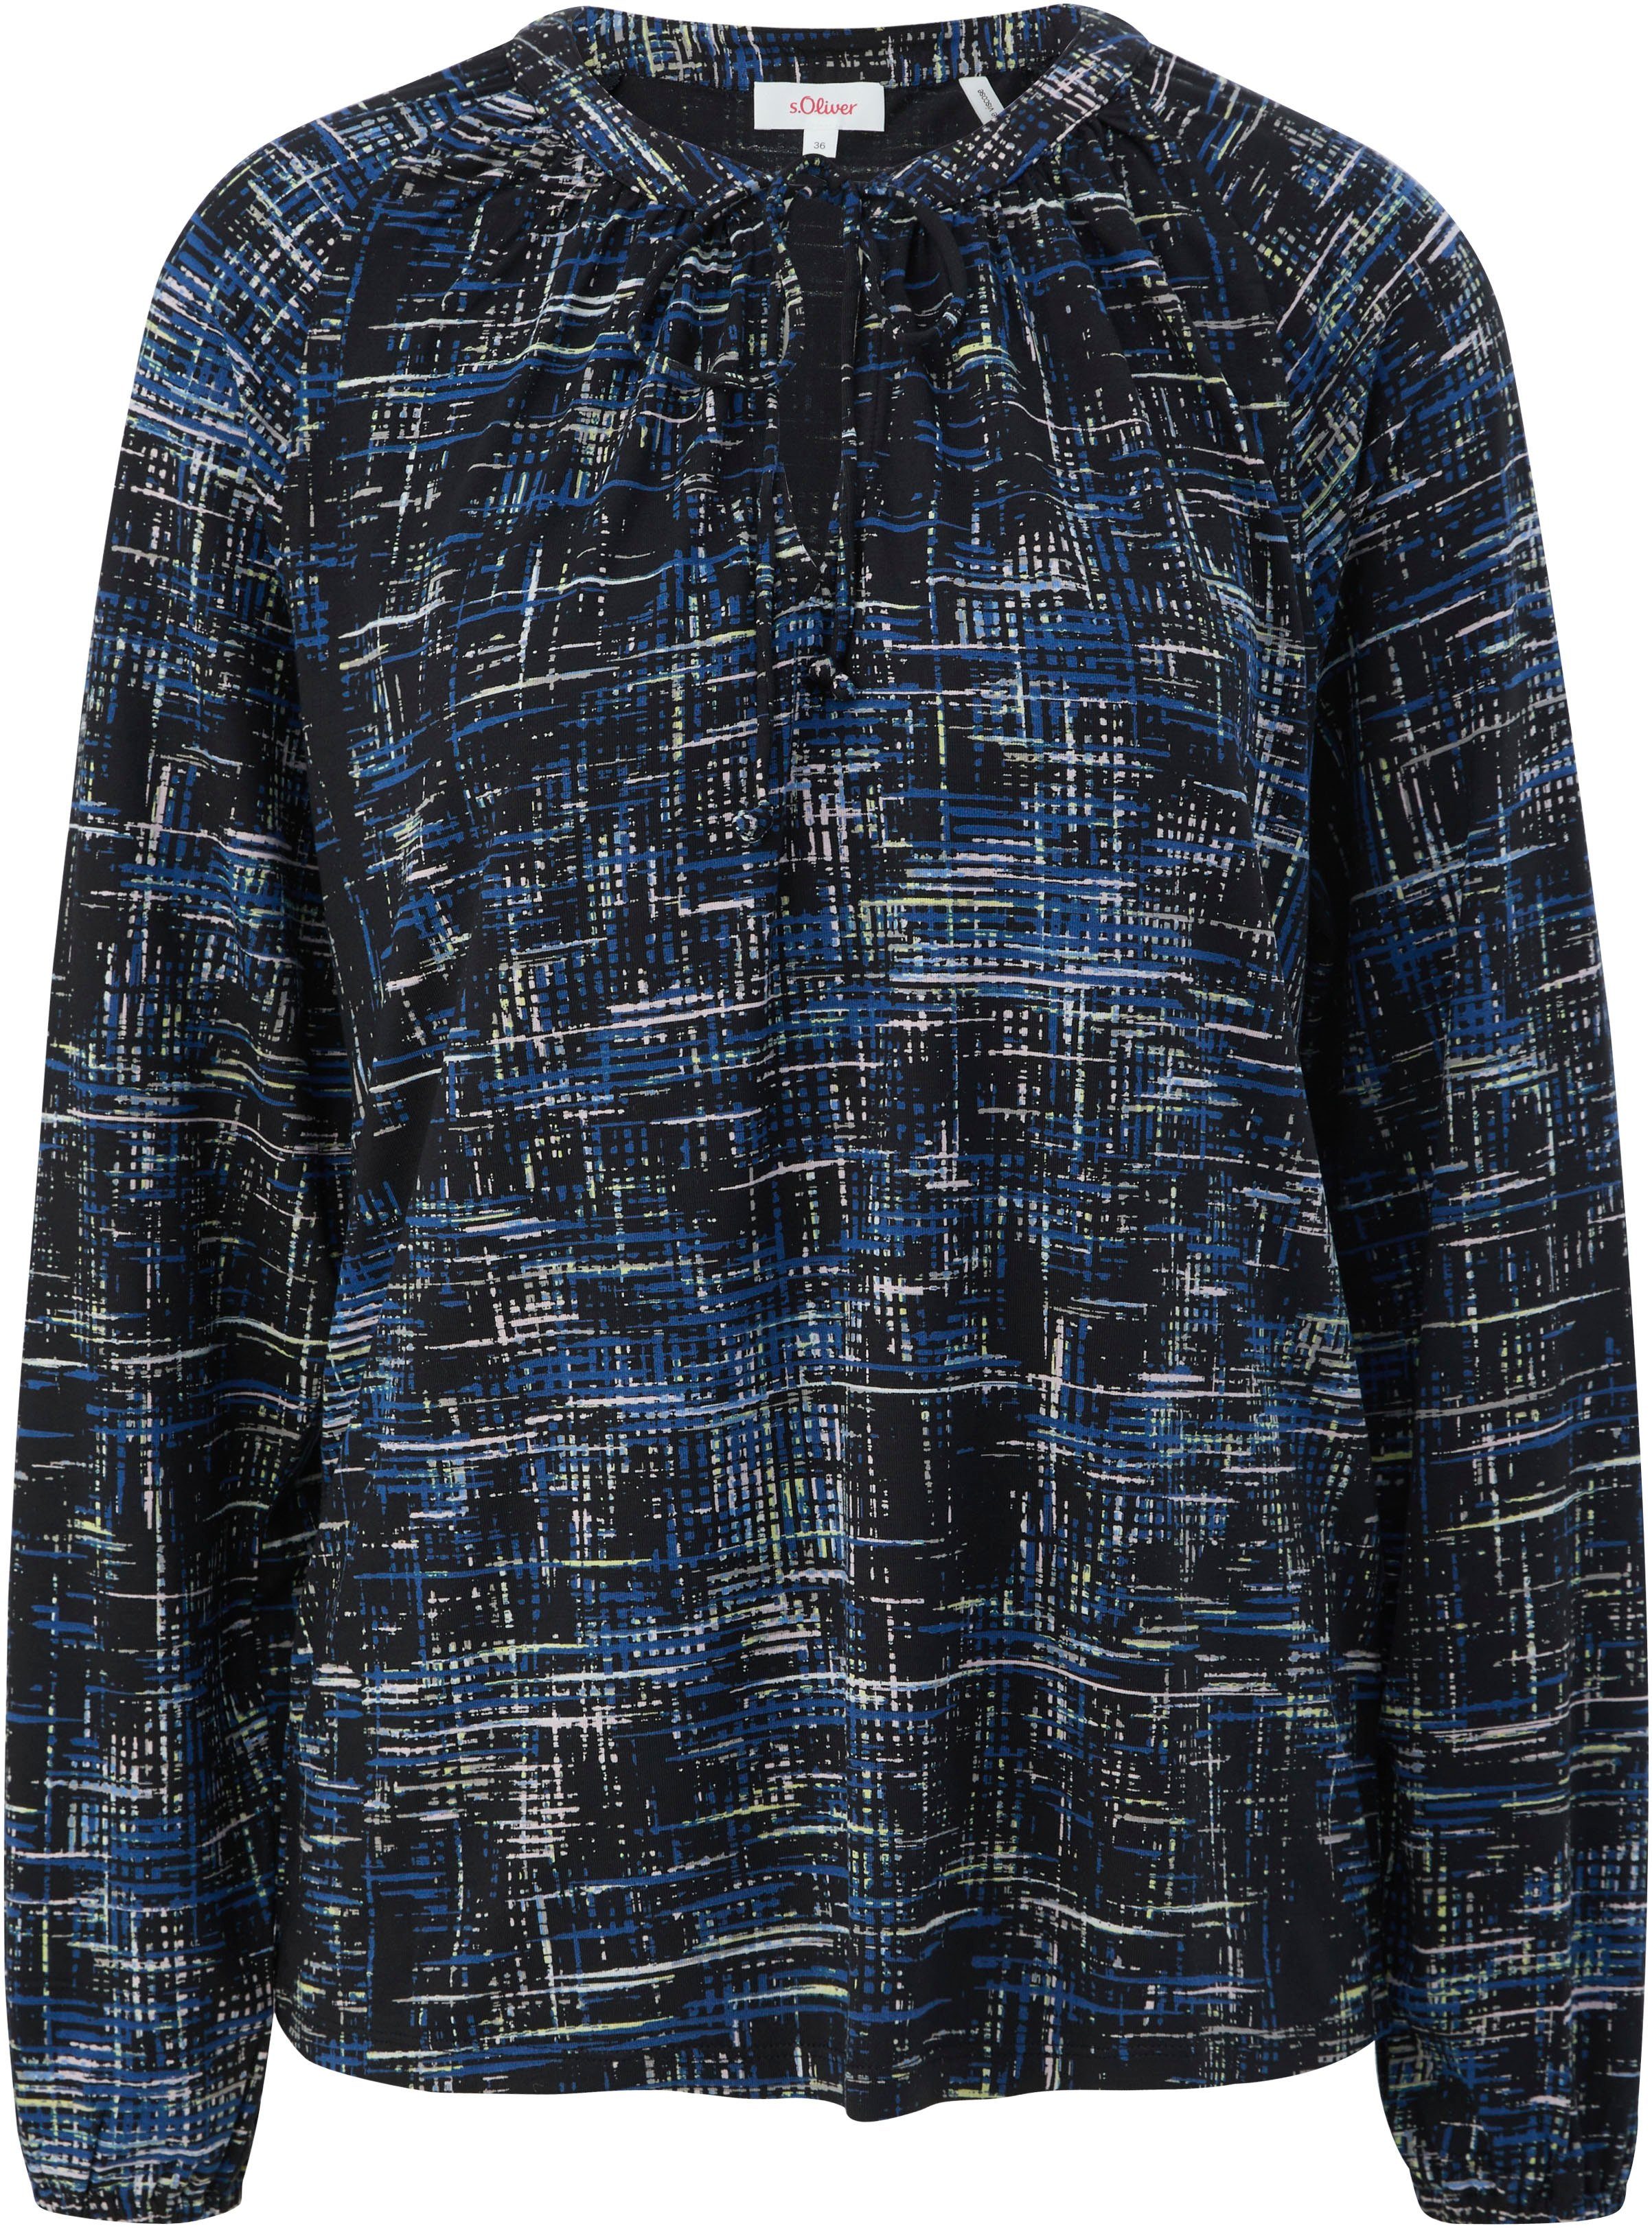 Blusenshirt Jerseybluse Allover-Muster mit s.Oliver Schwarz Mehrfarbig